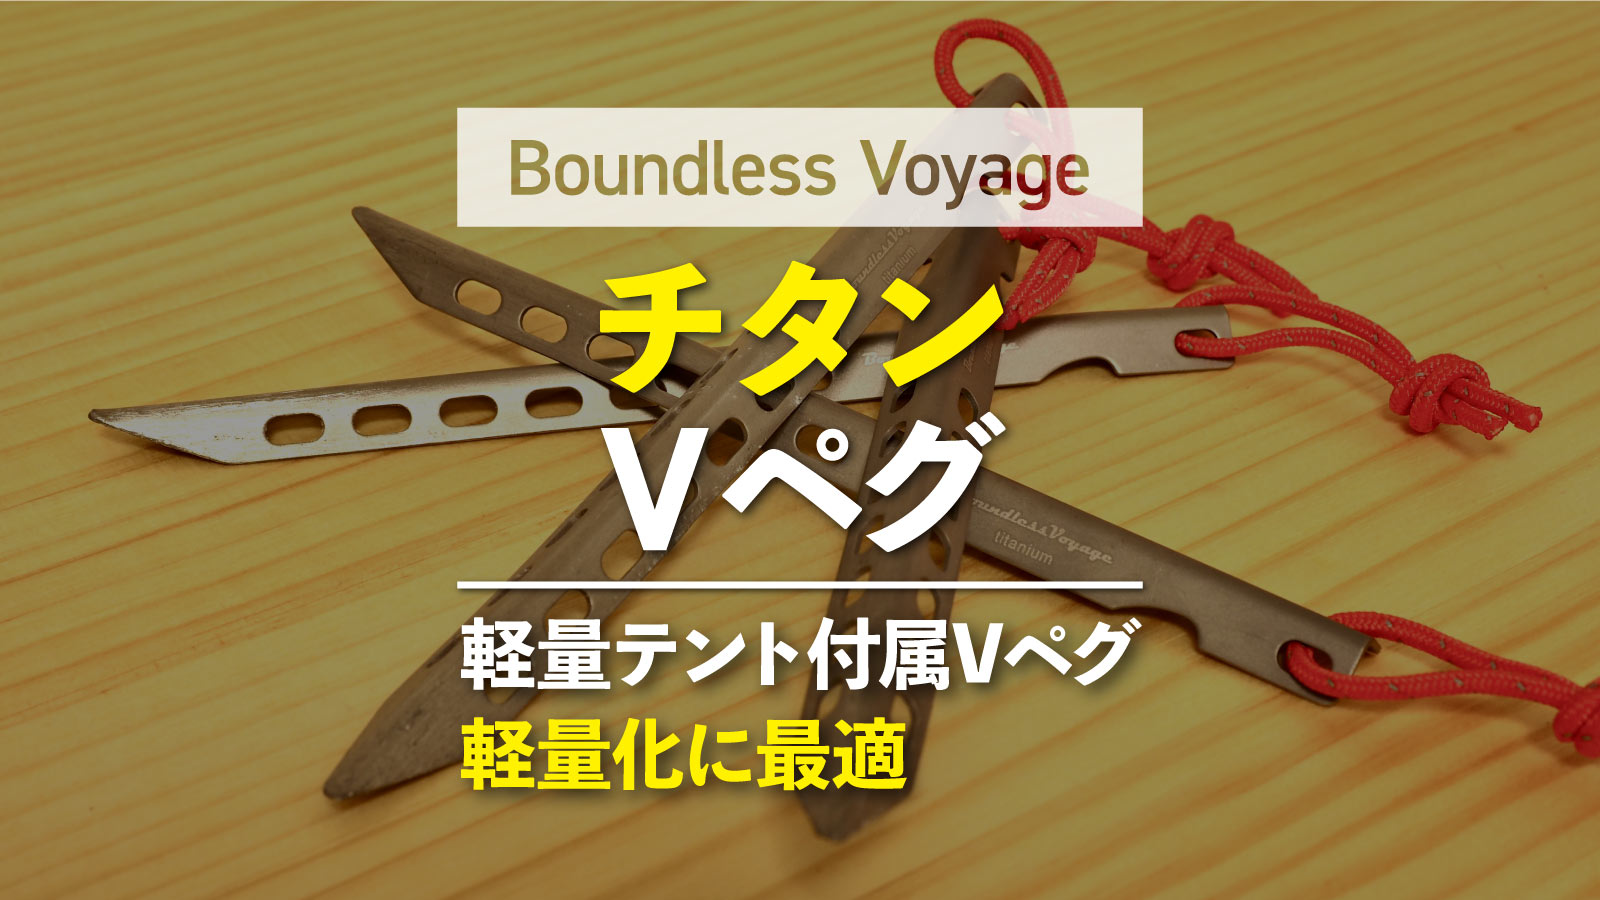 Boundless Voyage チタンvペグレビュー 強度 使い勝手は 3年使用 野ログ